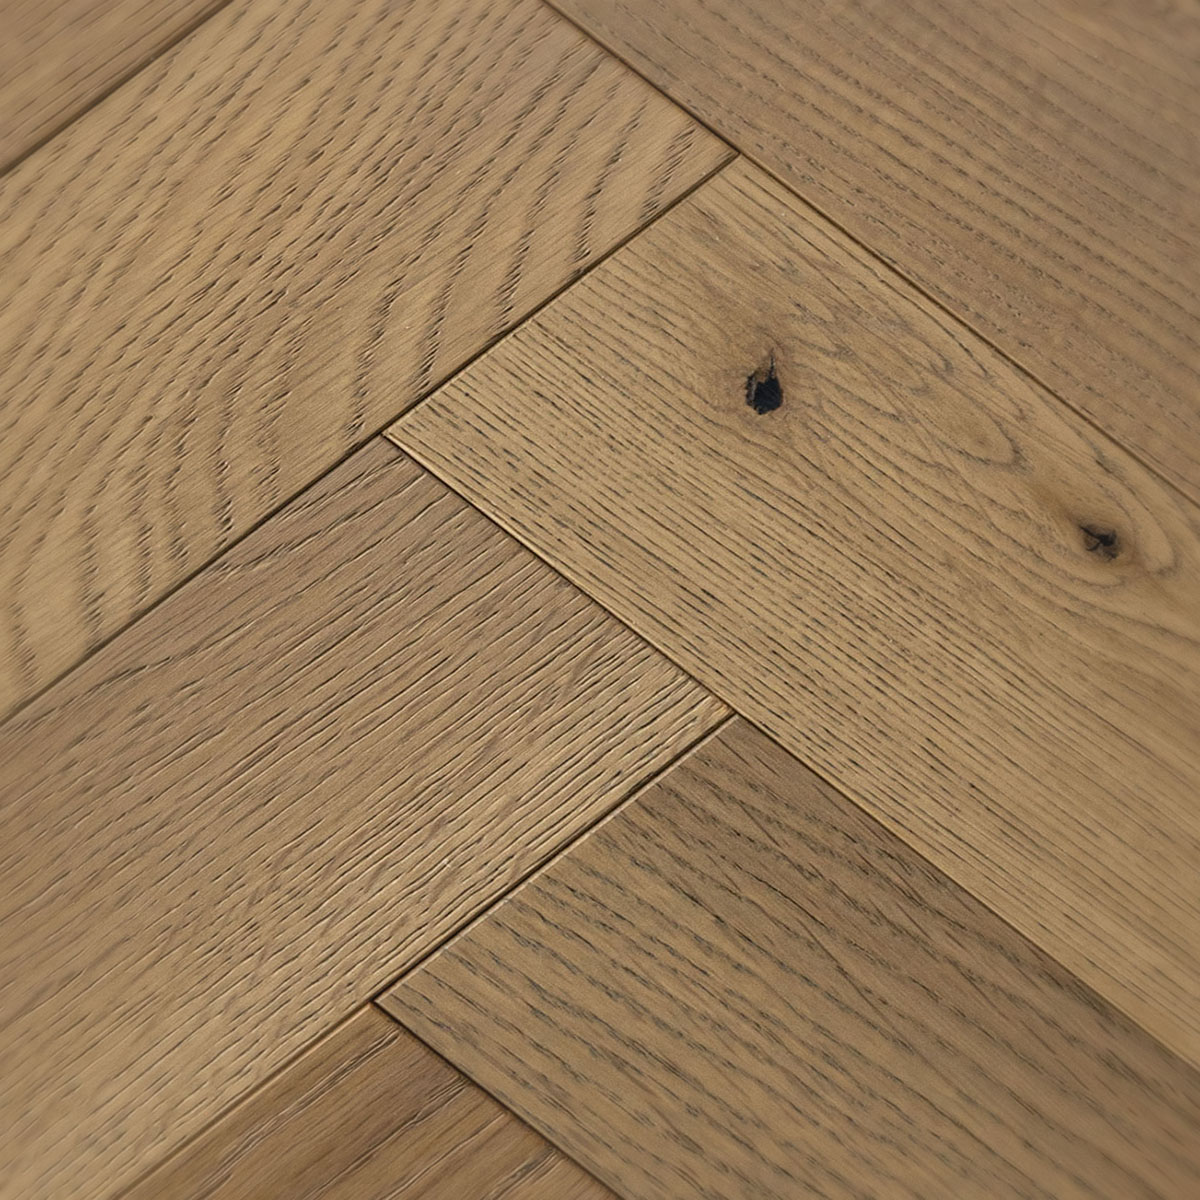 Tenny Lane - Medium Oak Coloured Parquet Wood Floor